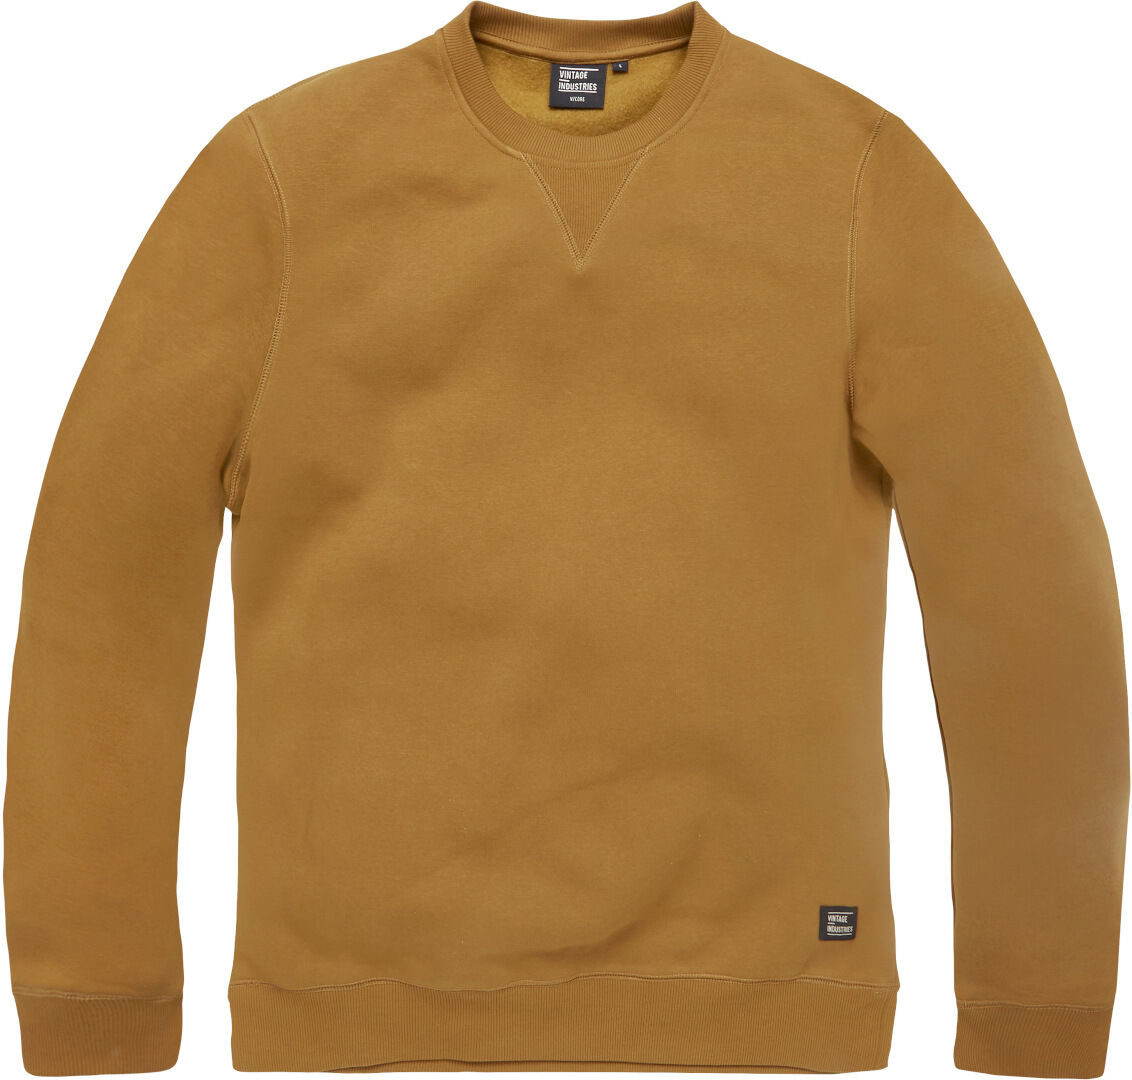 Vintage Industries Greeley Crewneck Sweatshirt S Braun